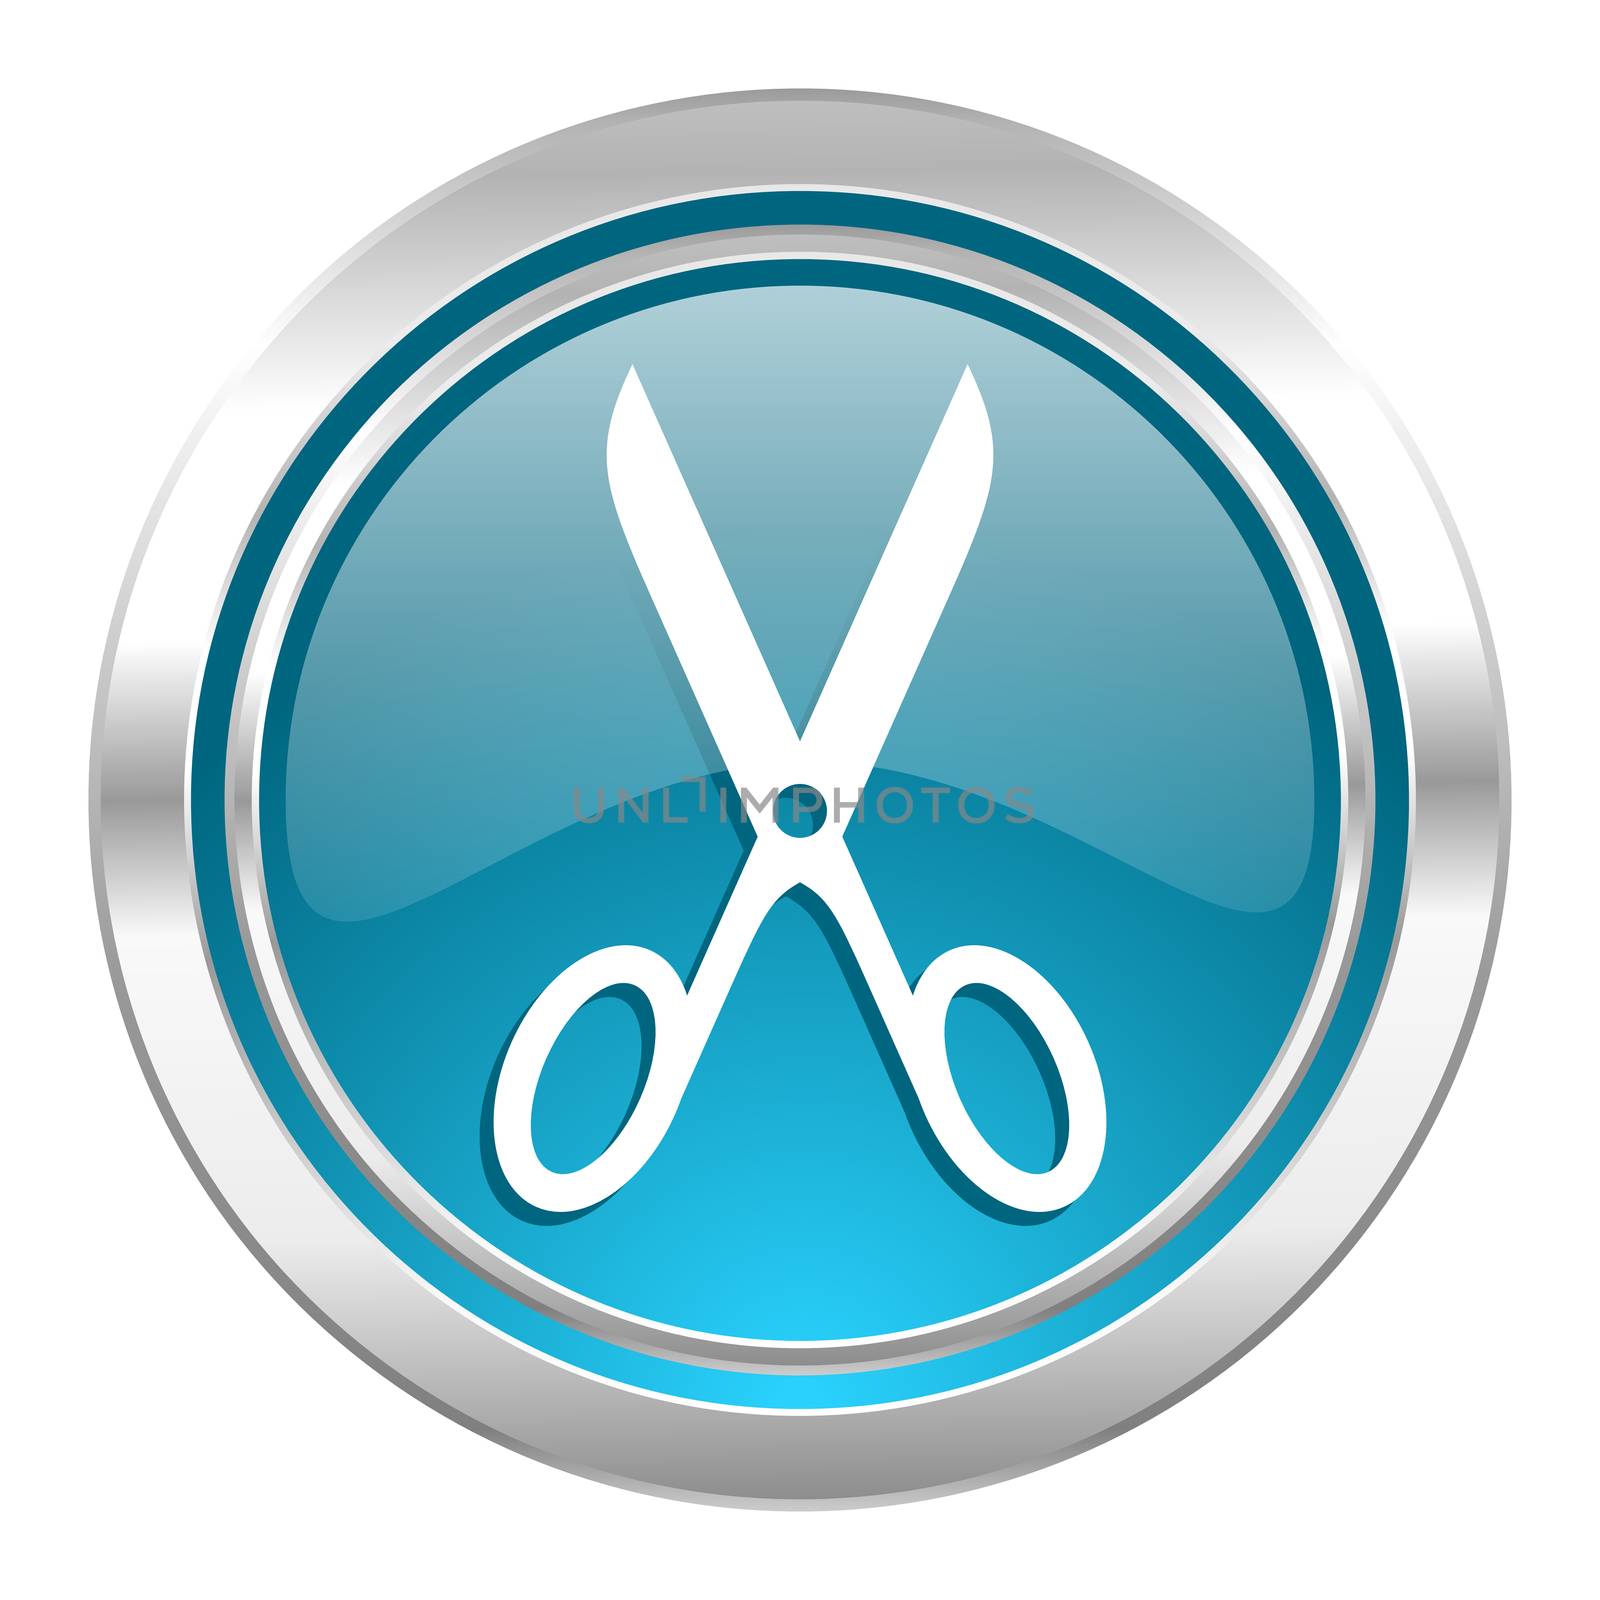 scissors icon, cut sign by alexwhite